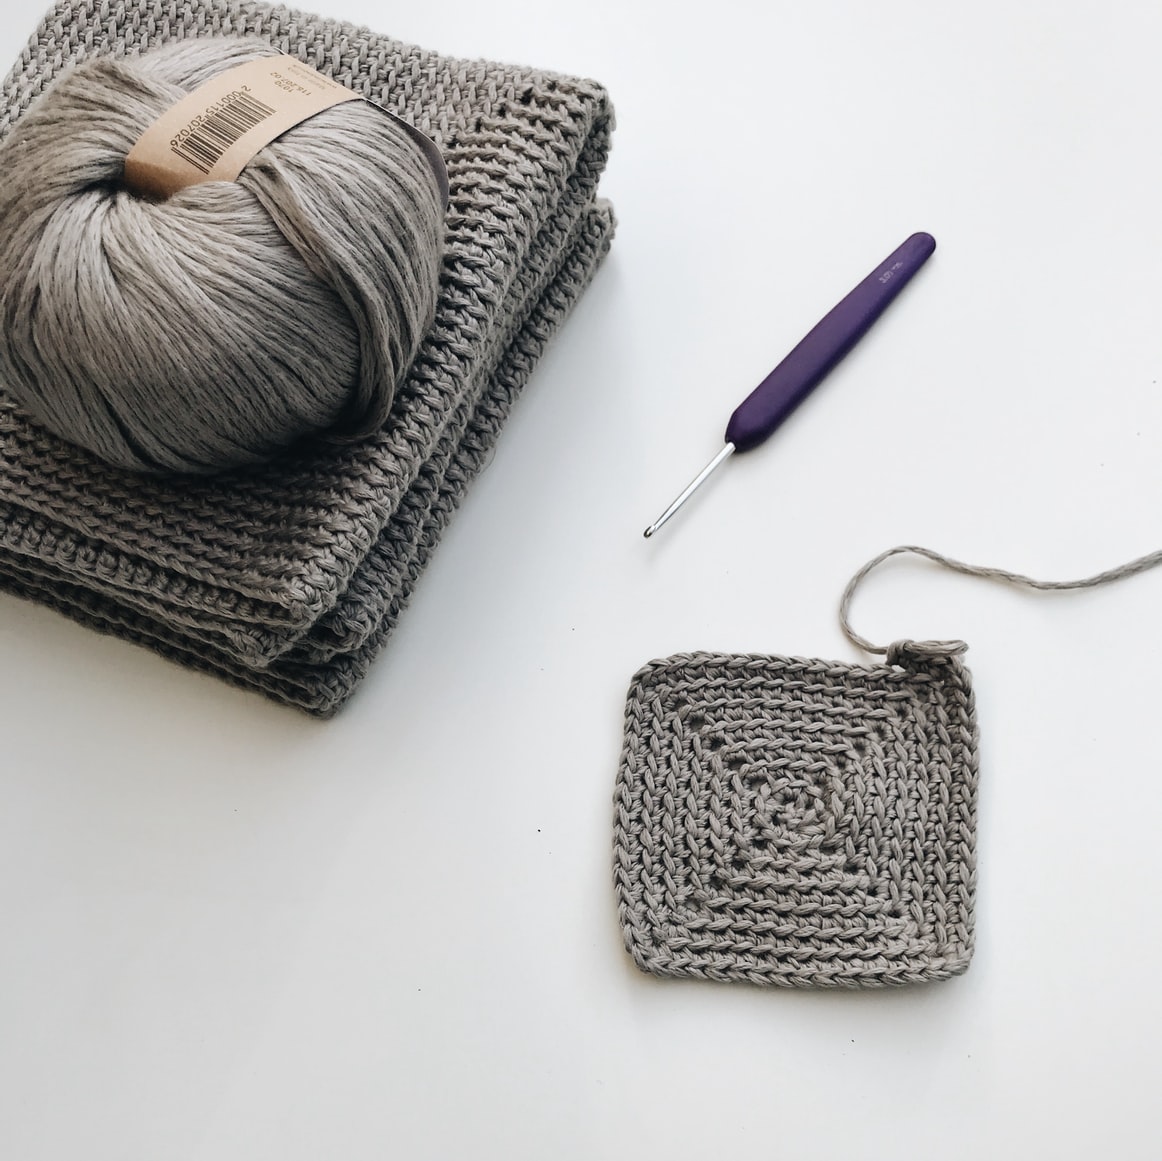 crochet-hooks-types-sizes-and-how-to-choose-the-best-one-skillshare-blog